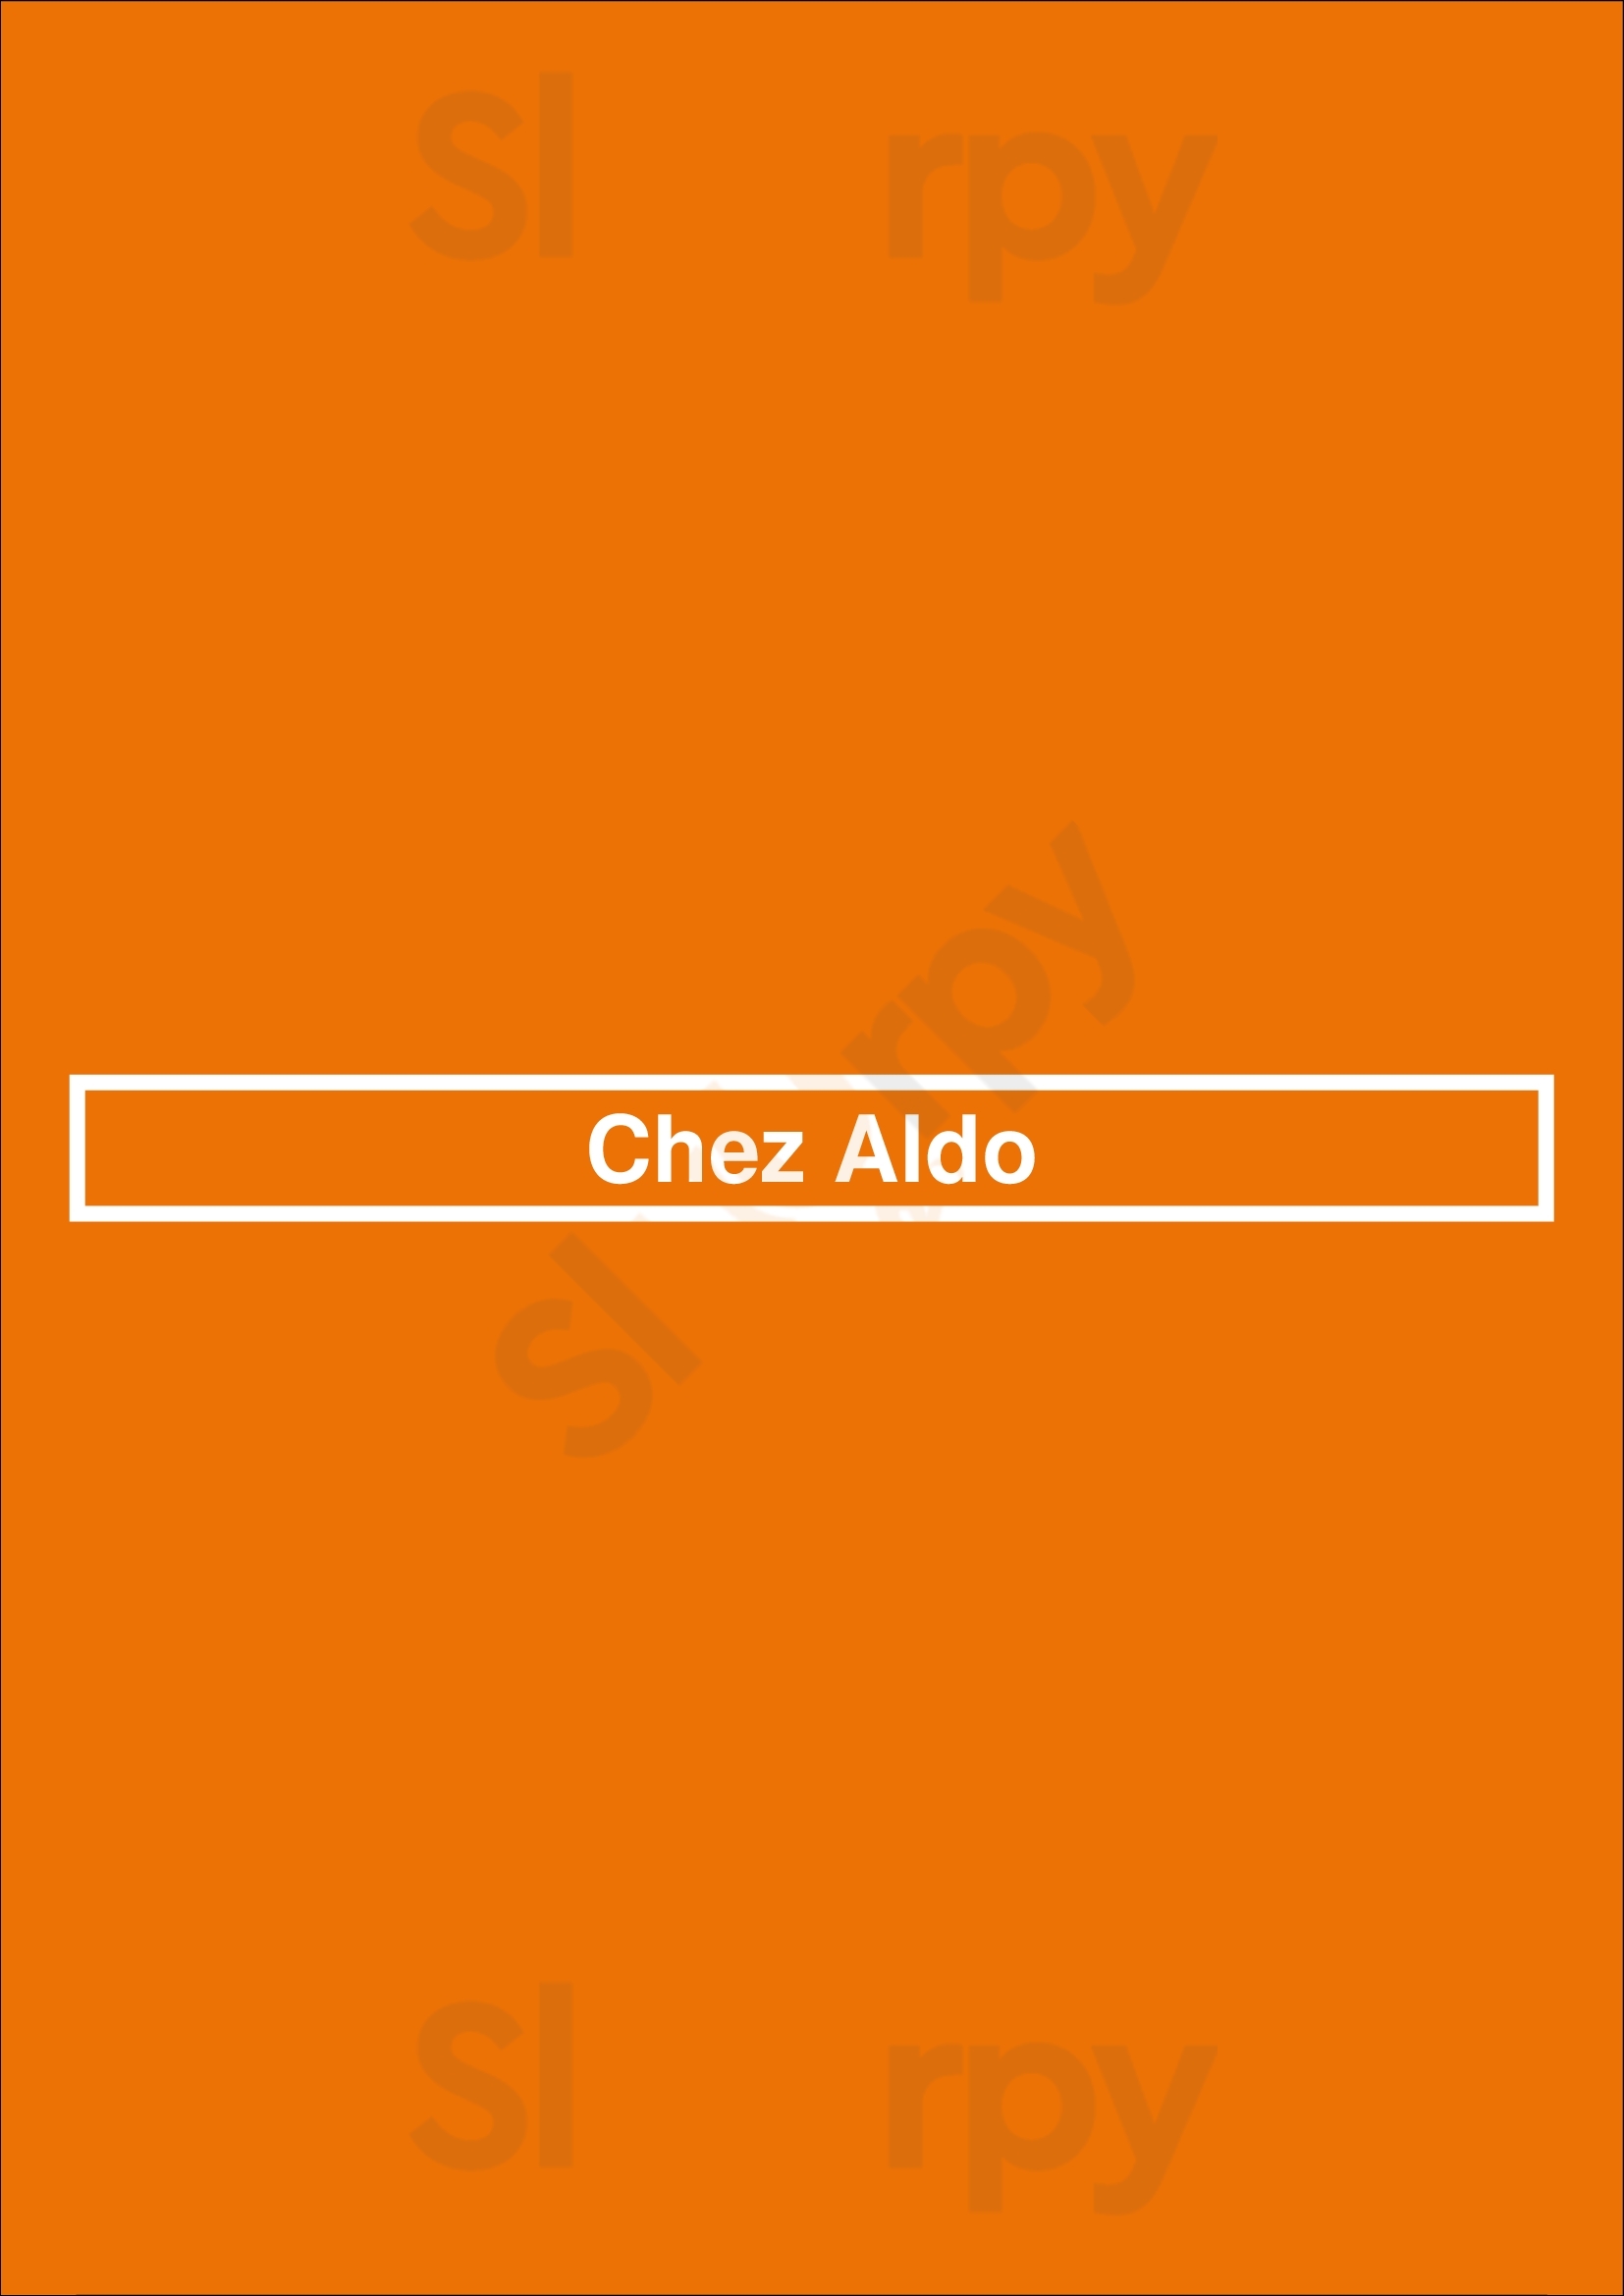 Chez Aldo Marseille Menu - 1